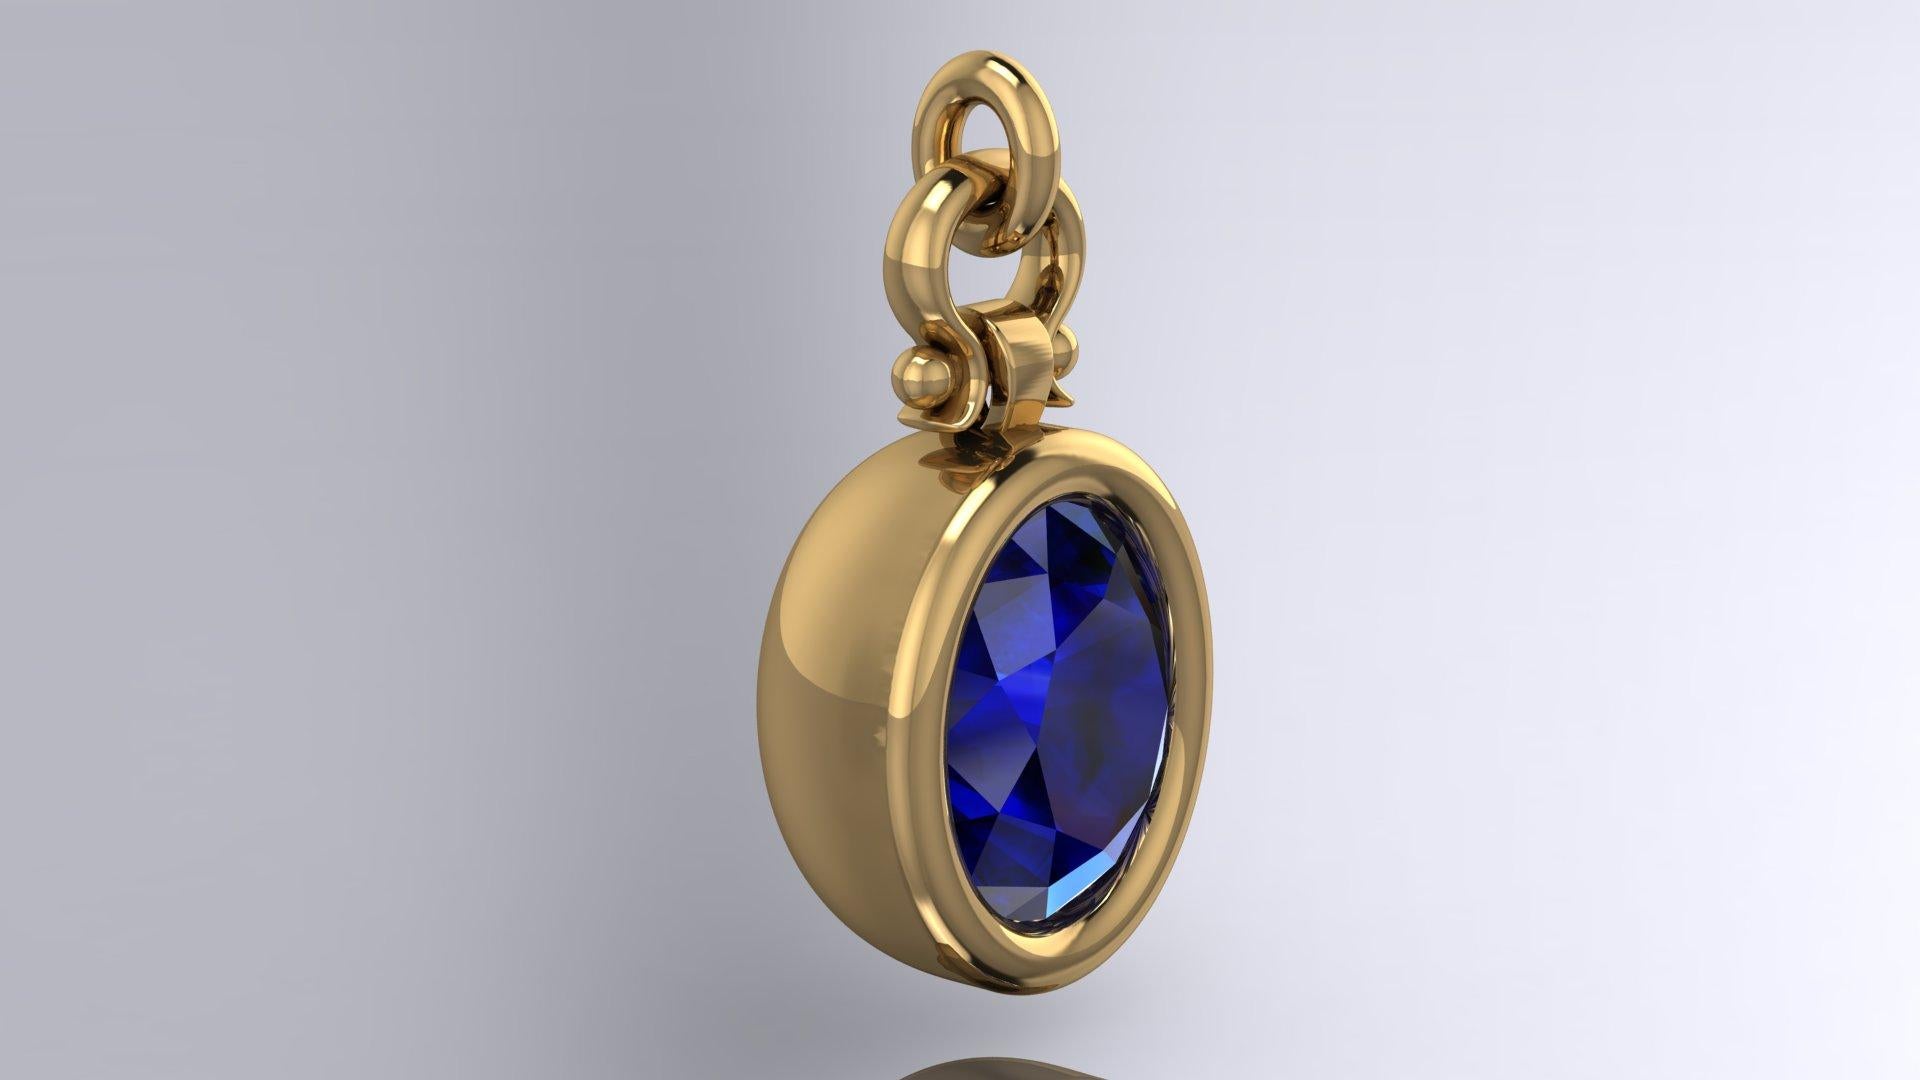 Contemporary Berberyn Certified 5.04 Carat Oval Blue Sapphire Custom Pendant Necklace in 18k For Sale